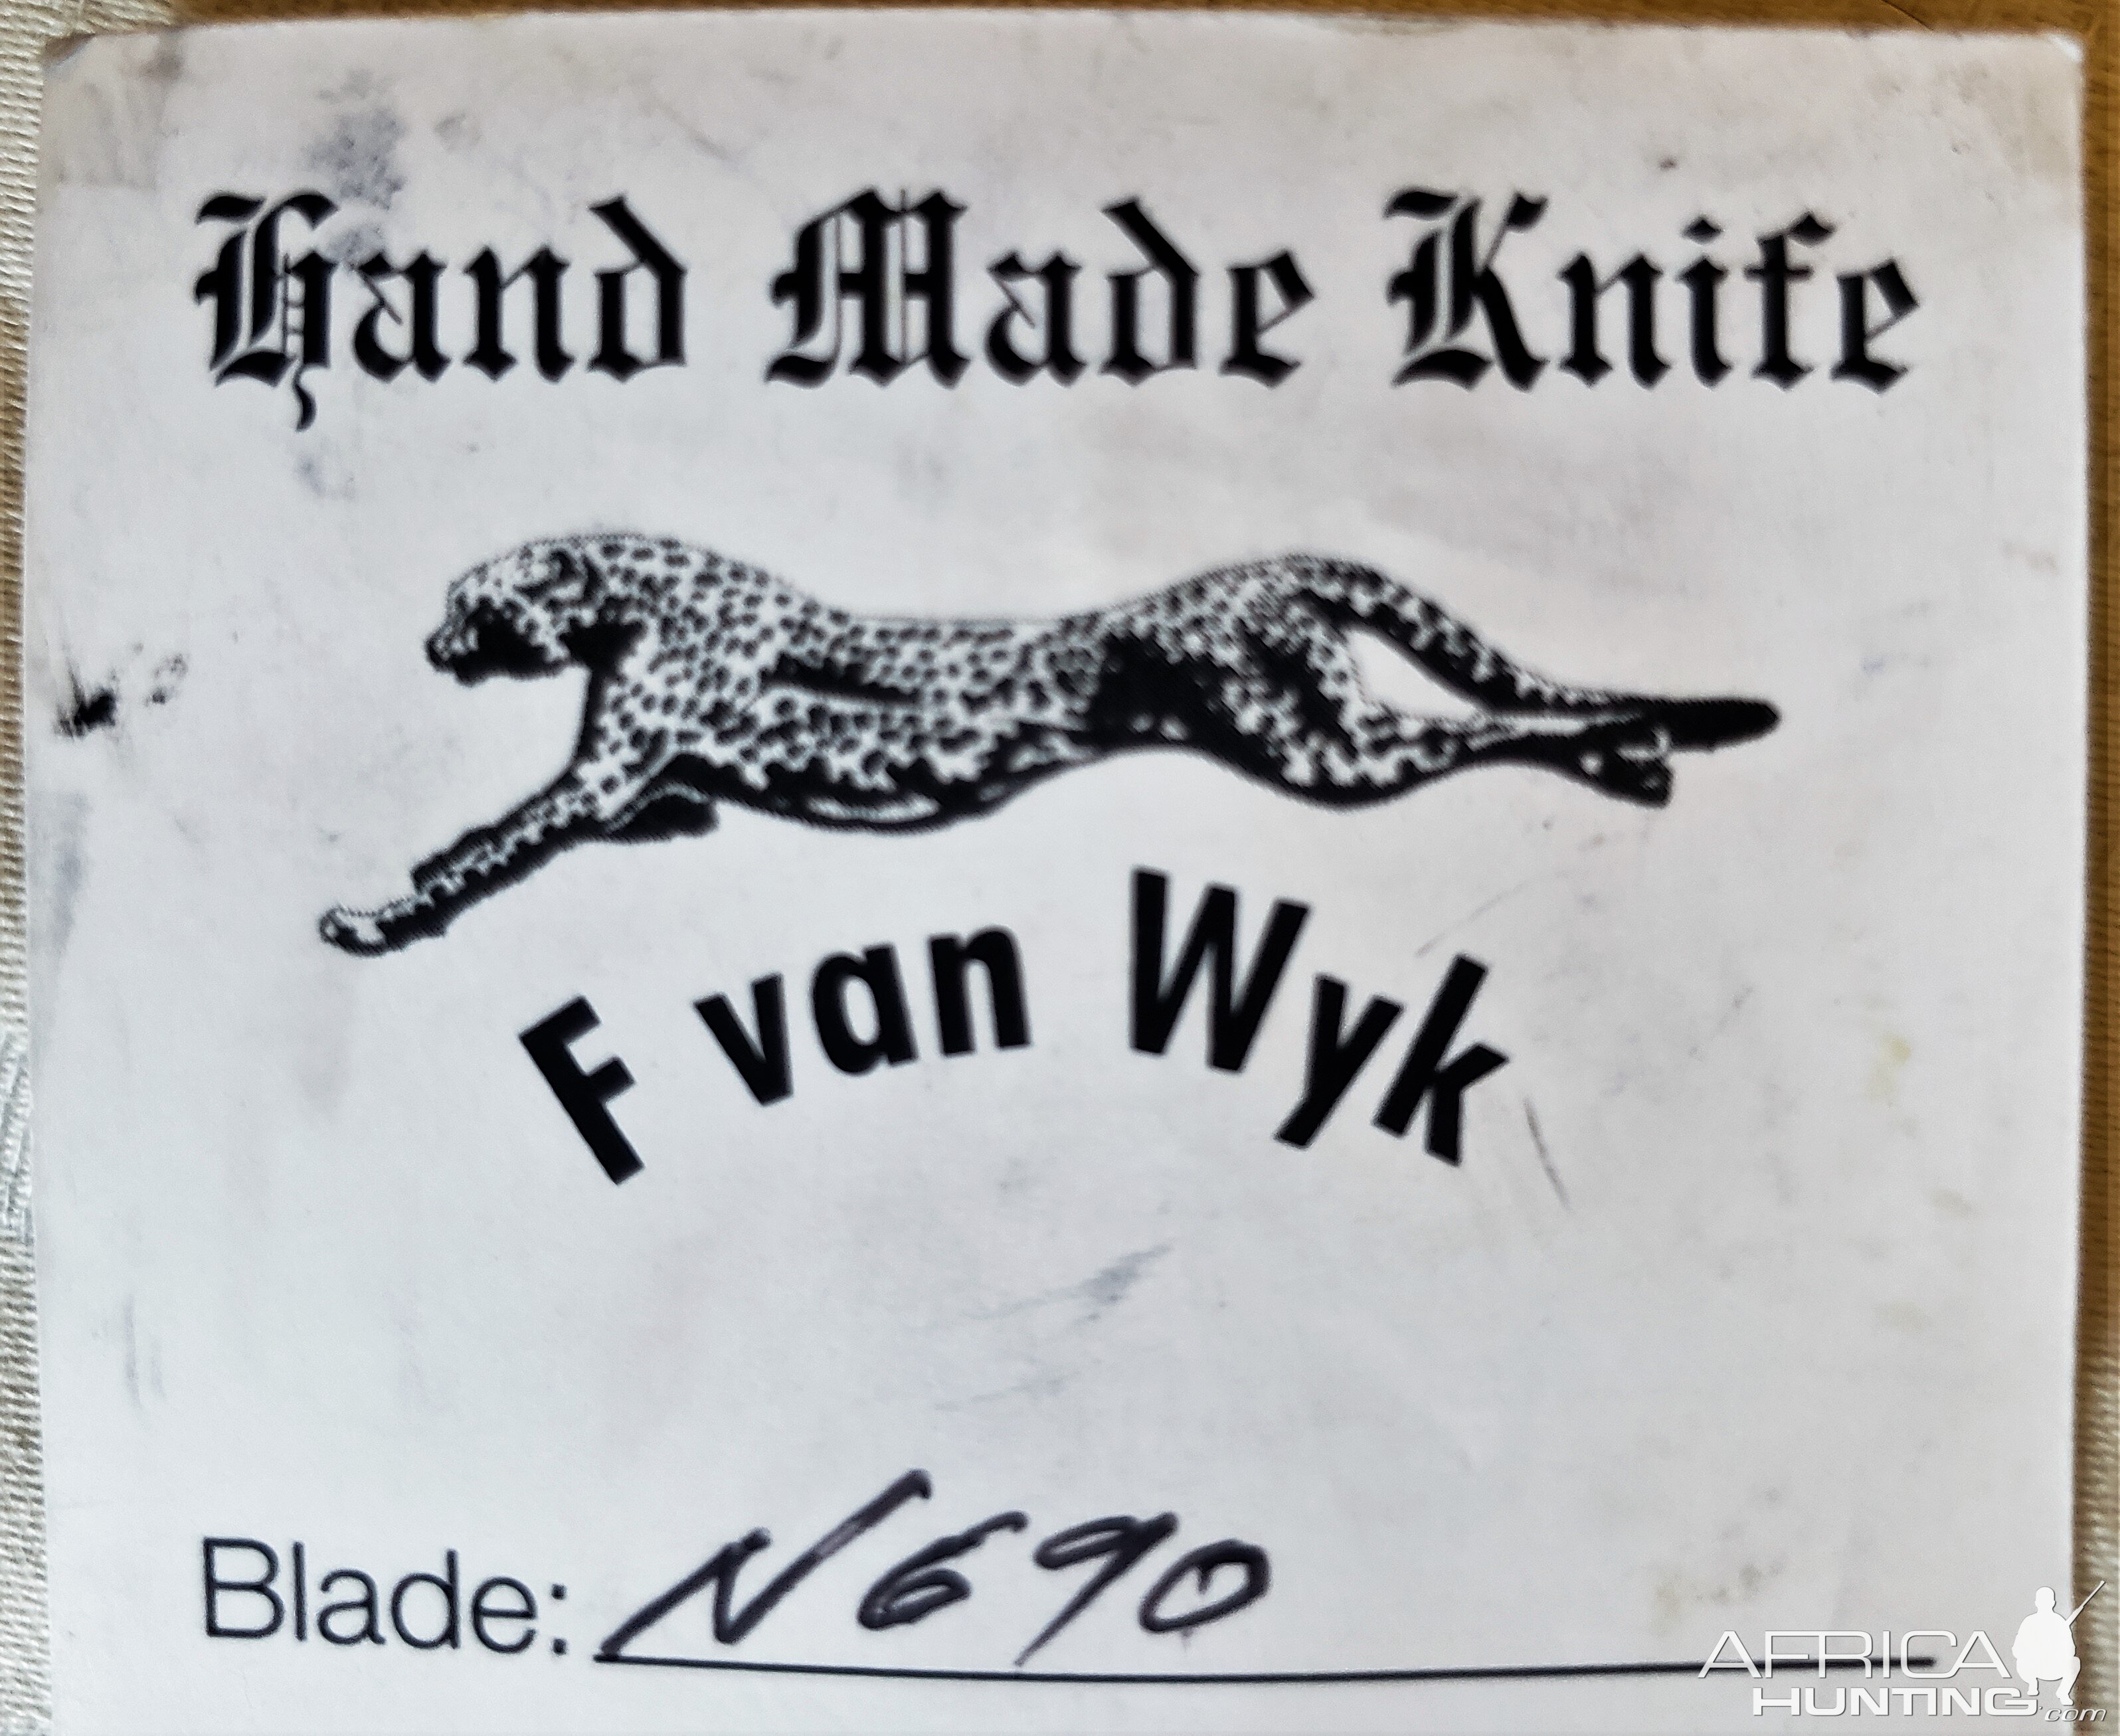 F van Wyk Custom Knives